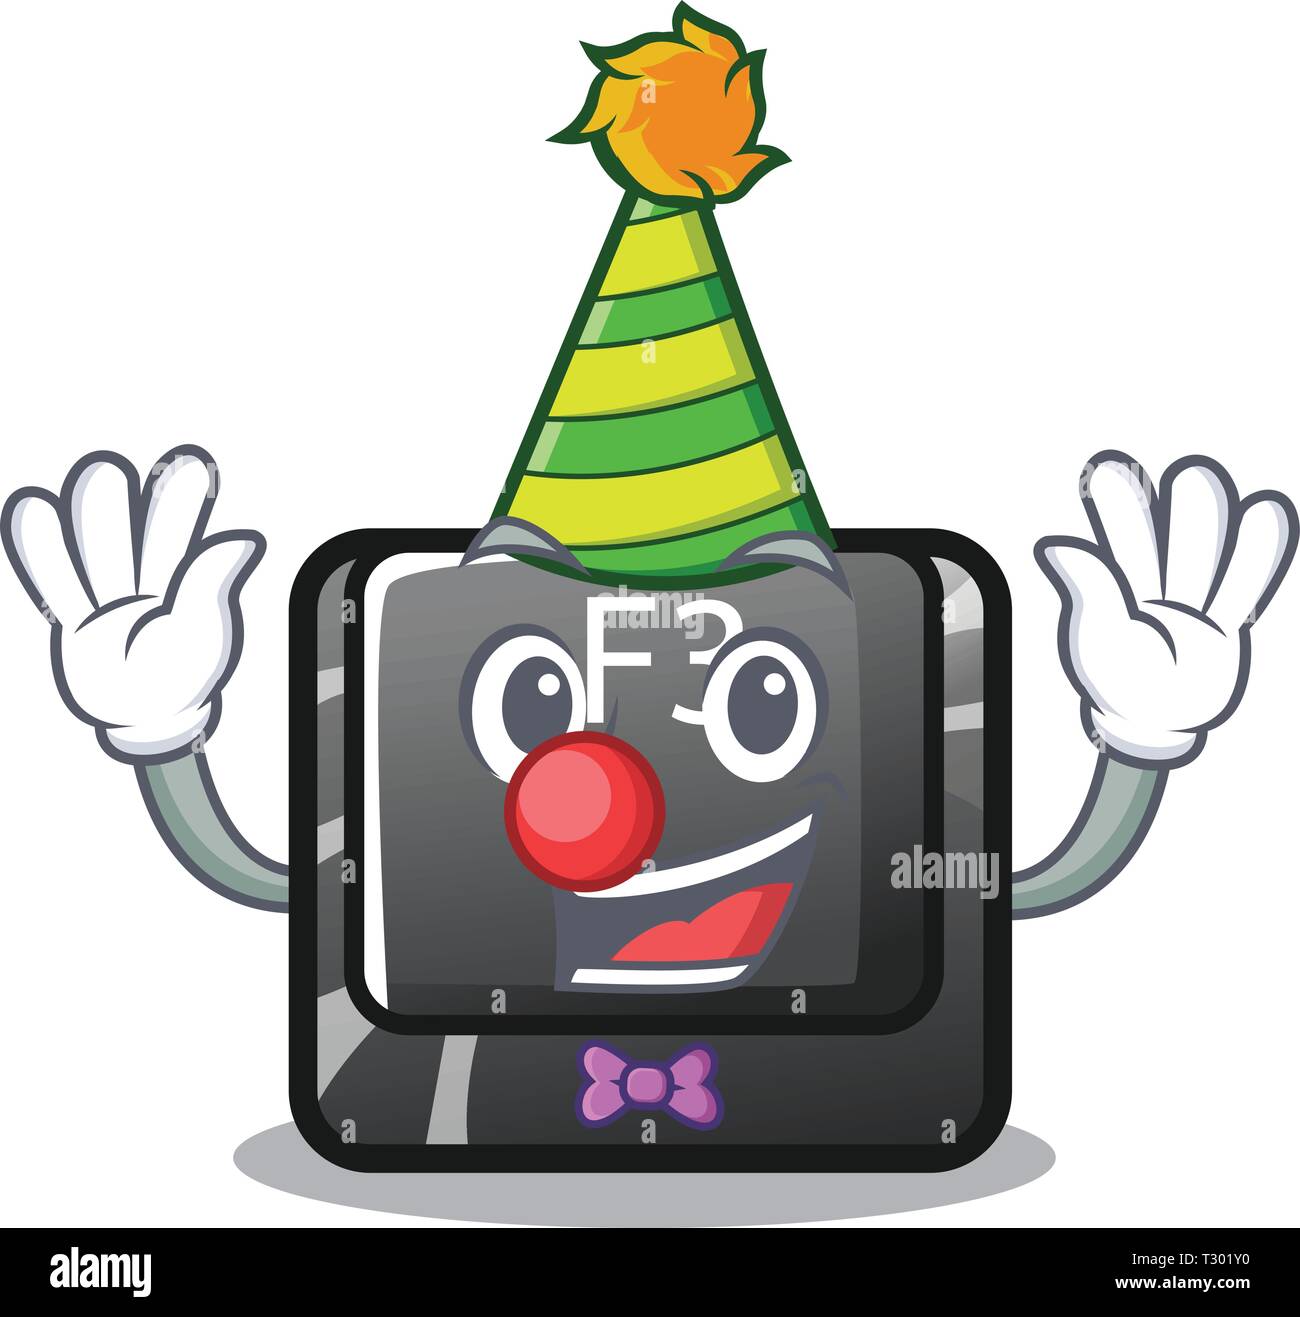 Clown f3 button installed on cartoon computer vector illustration Stock Vector